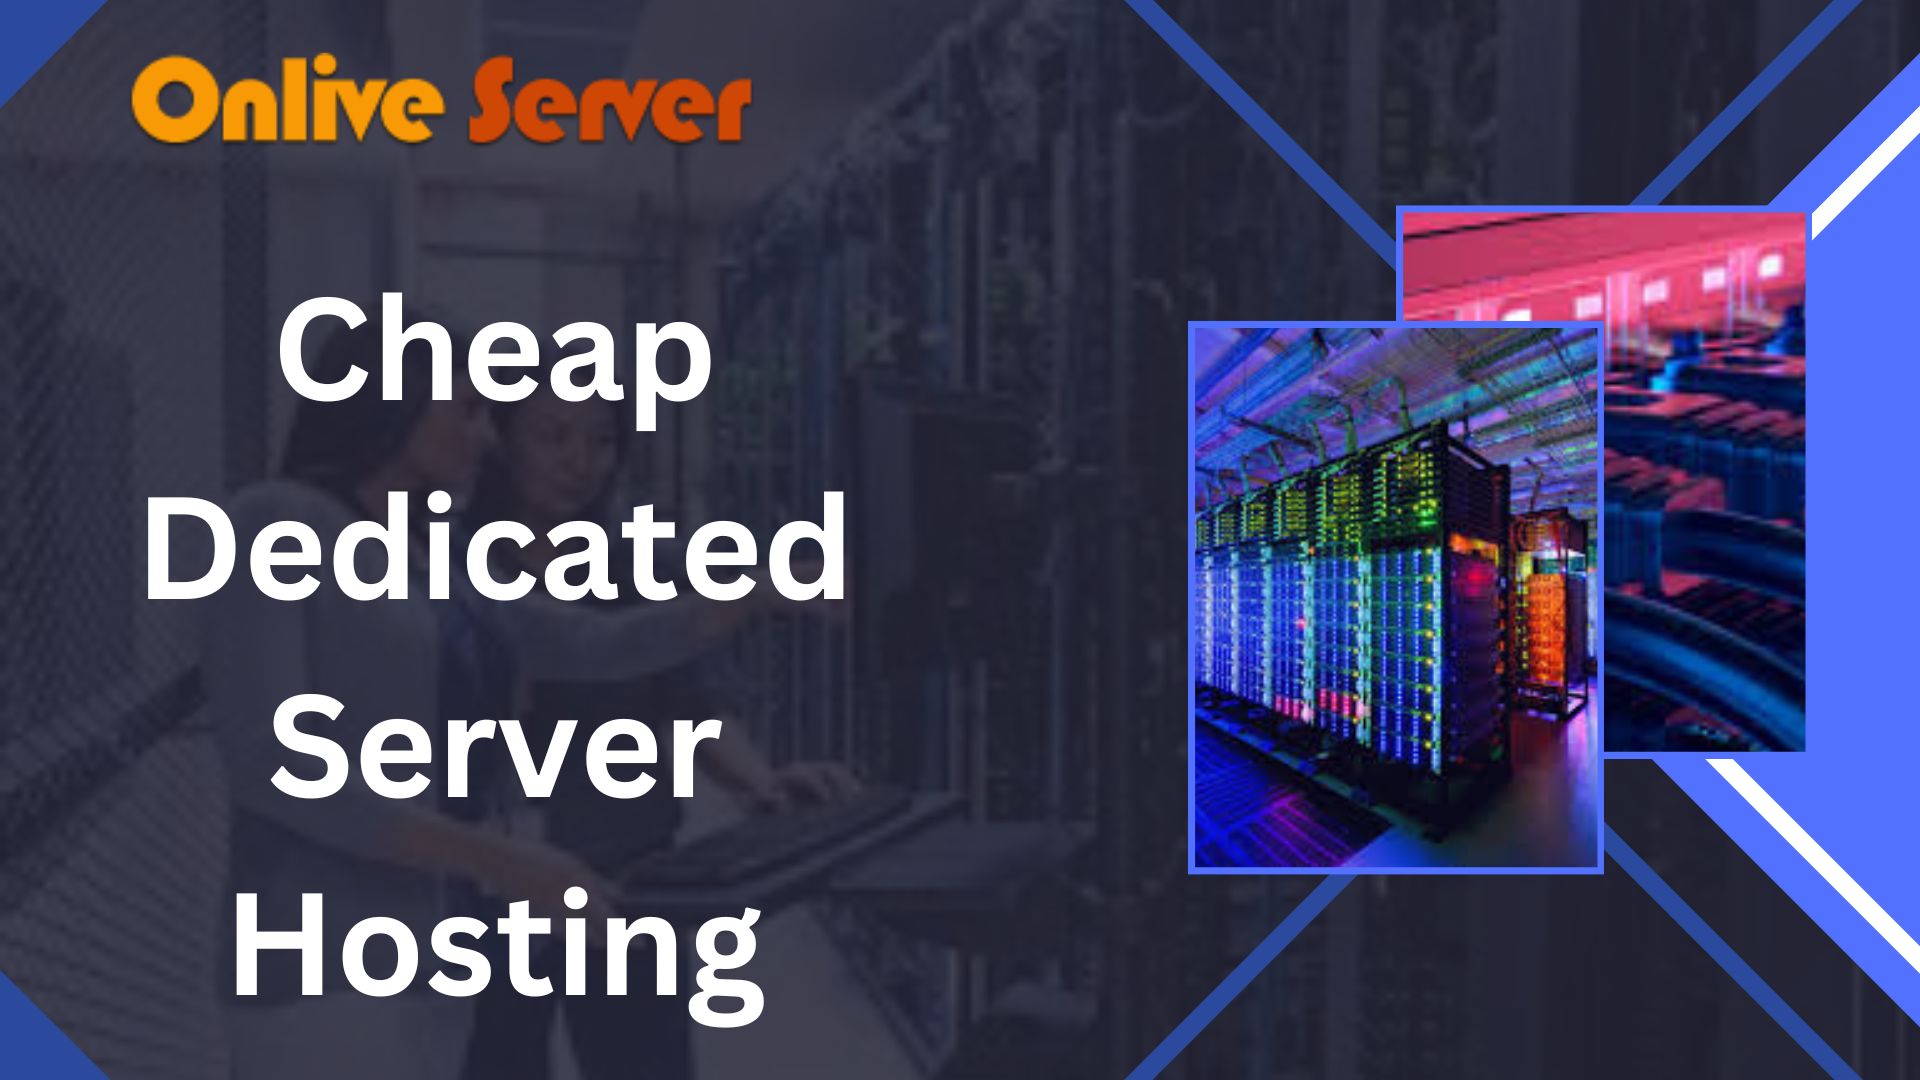 Cheap Dedicated Server Hosting